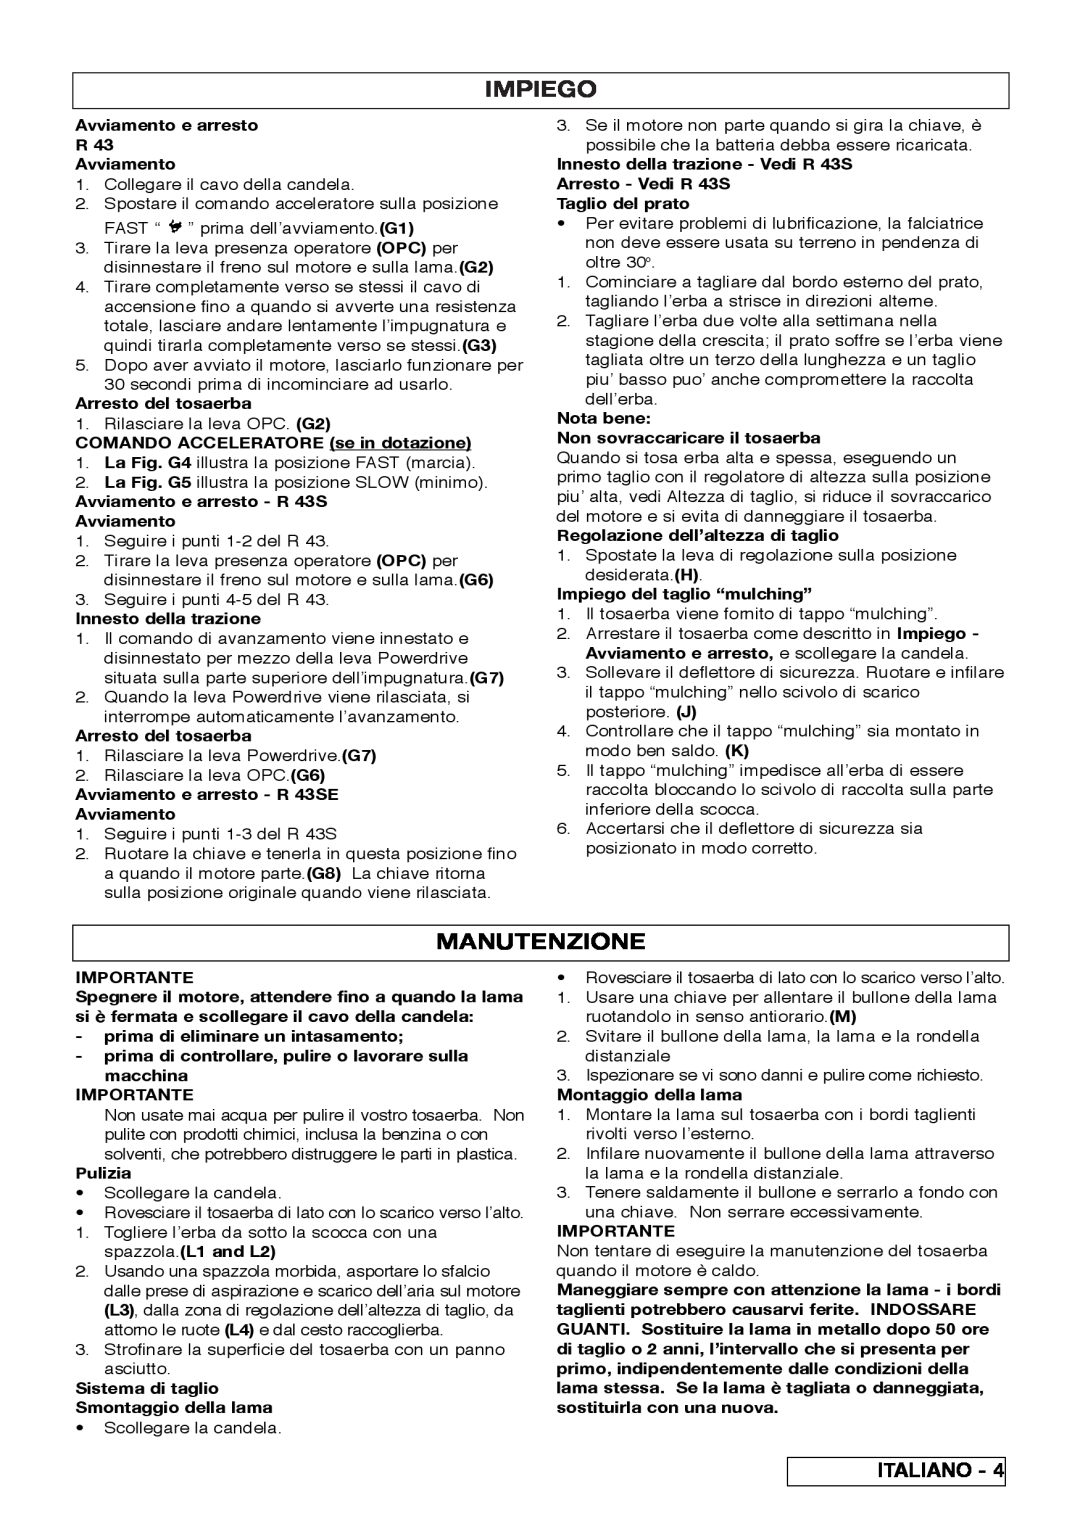 Husqvarna R 43SE manual Impiego, Manutenzione 